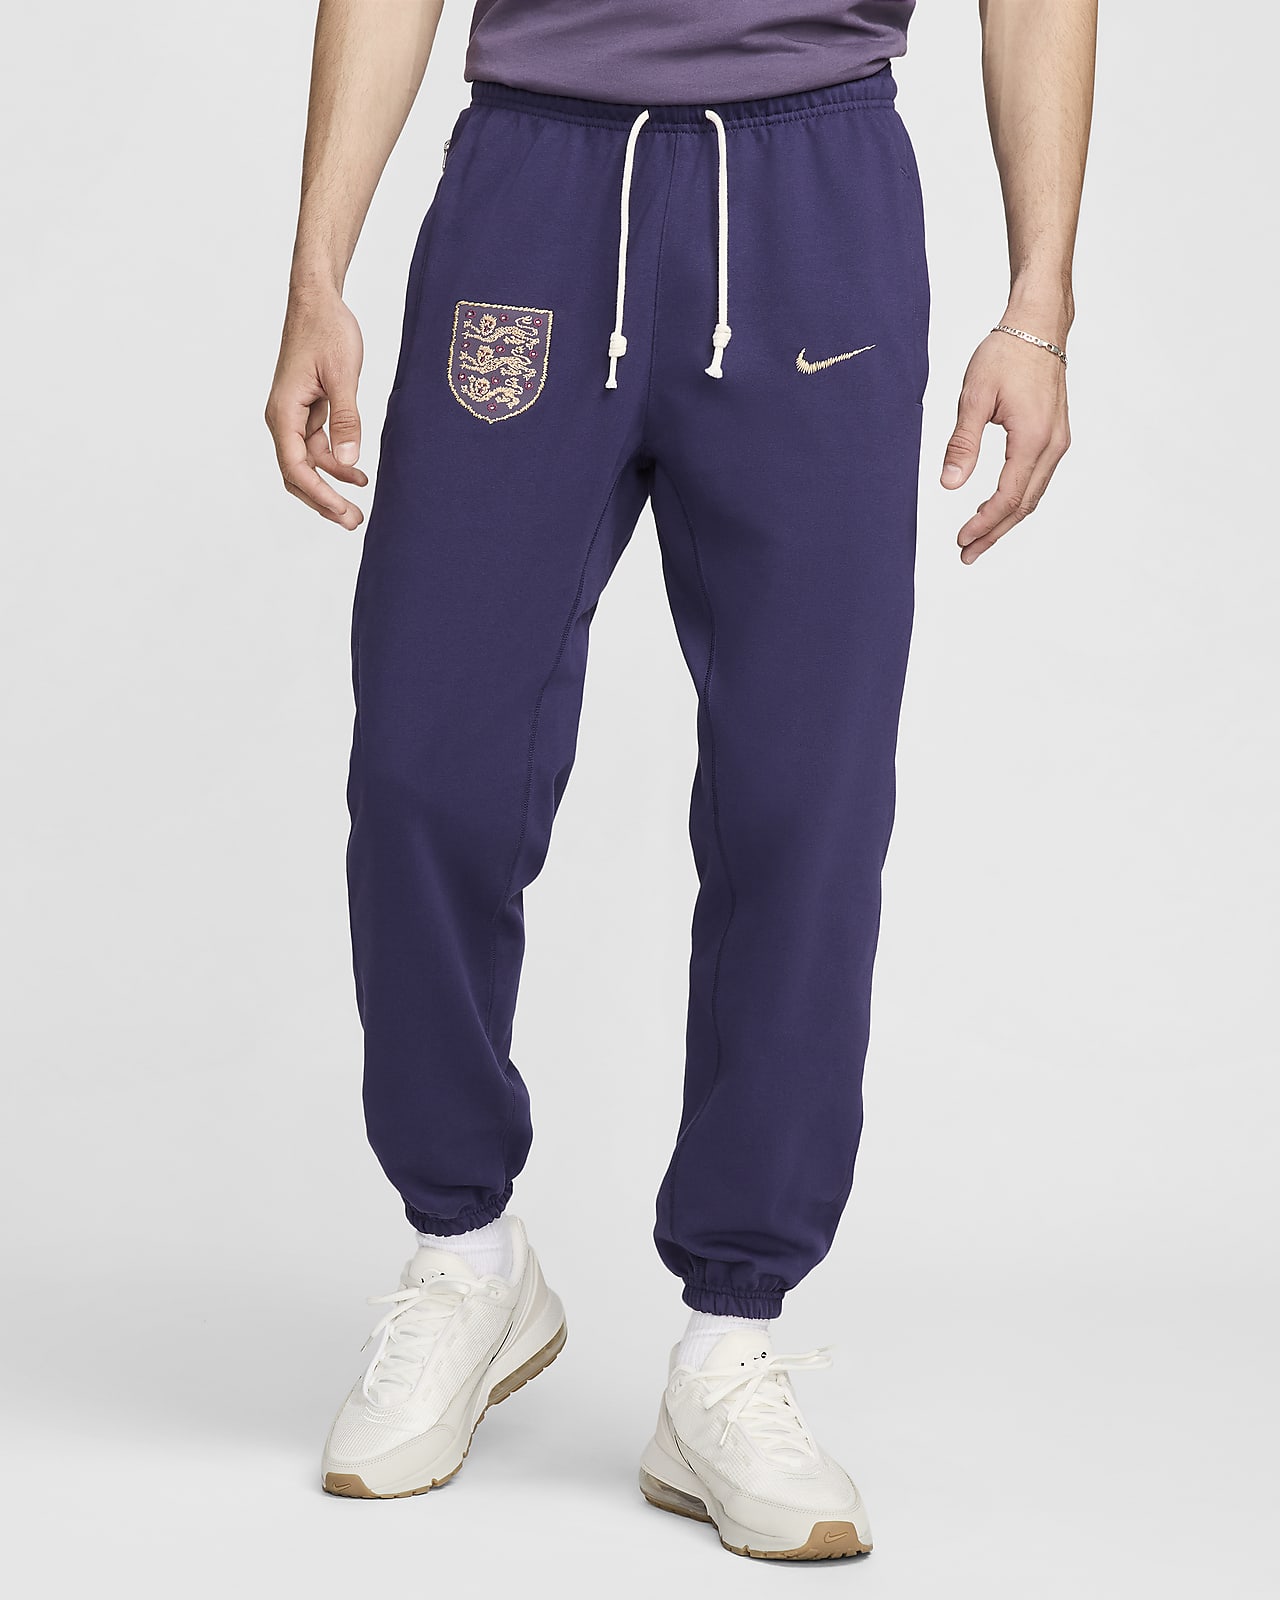 Anglaterra Standard Issue Pantalons de futbol Nike - Home